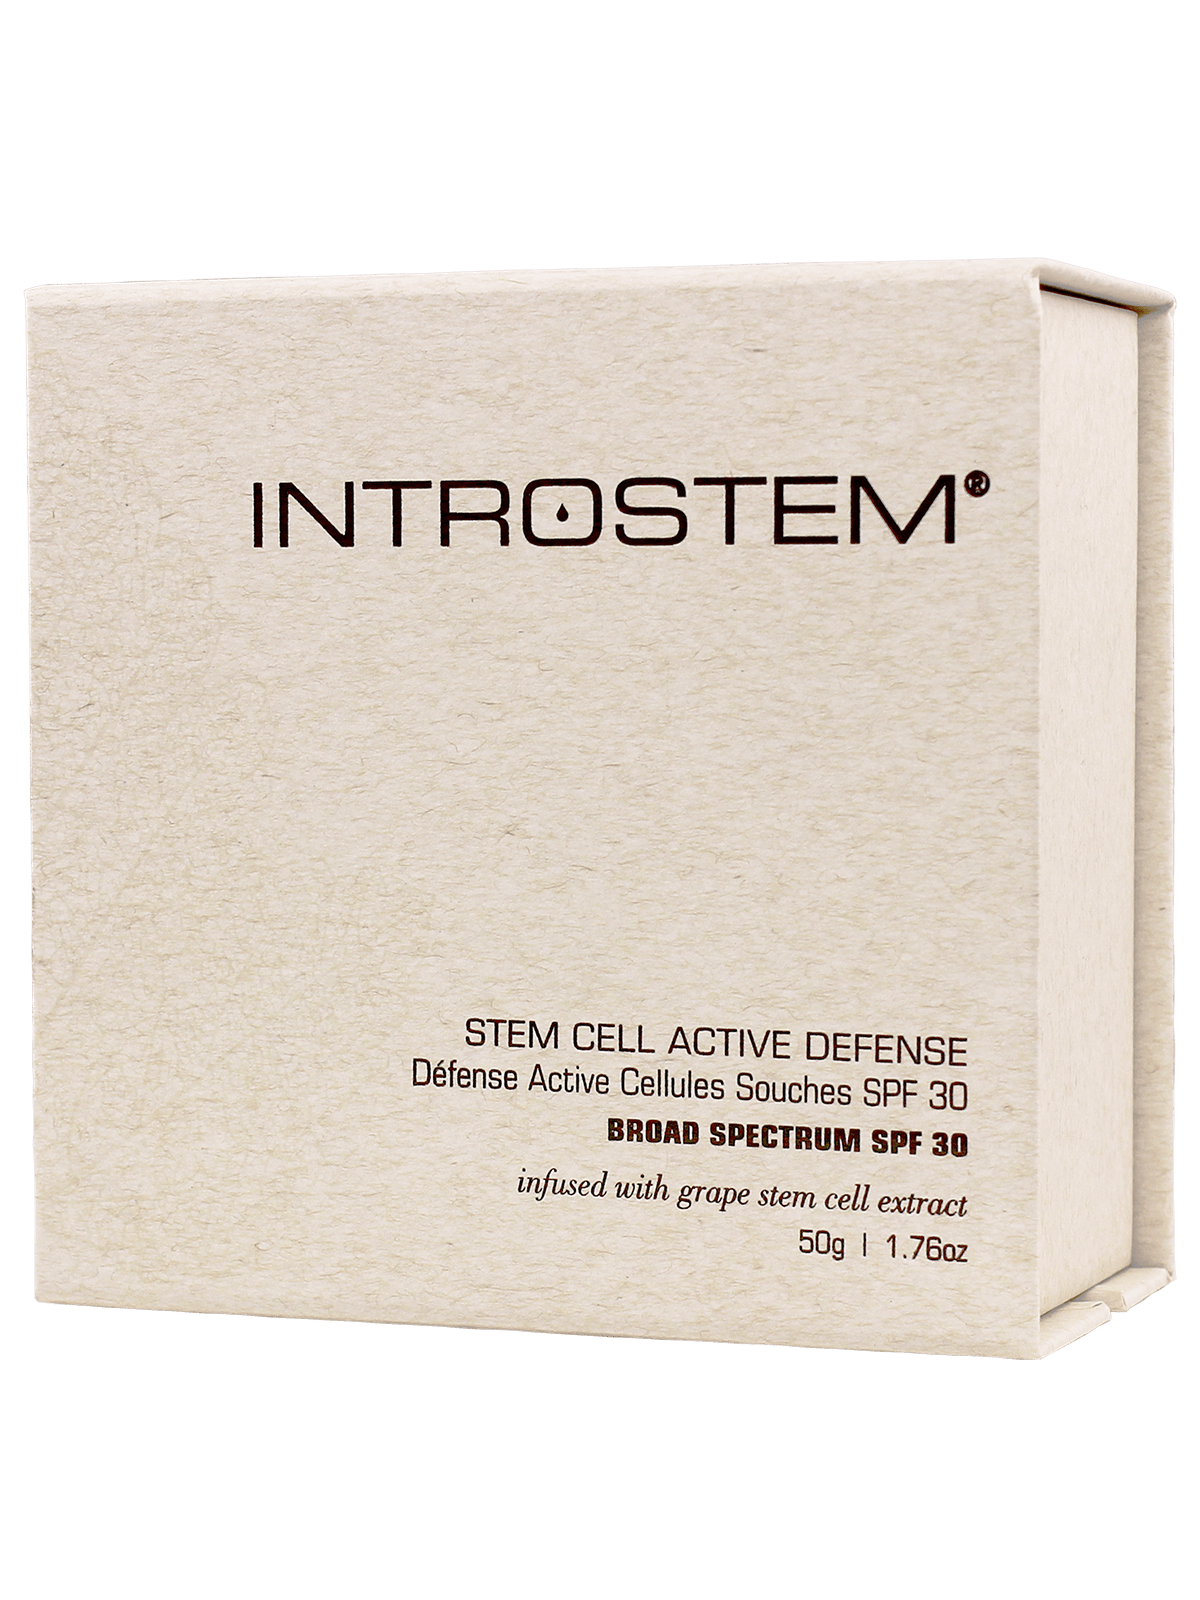 Stem-Cell-Active-Defense-box